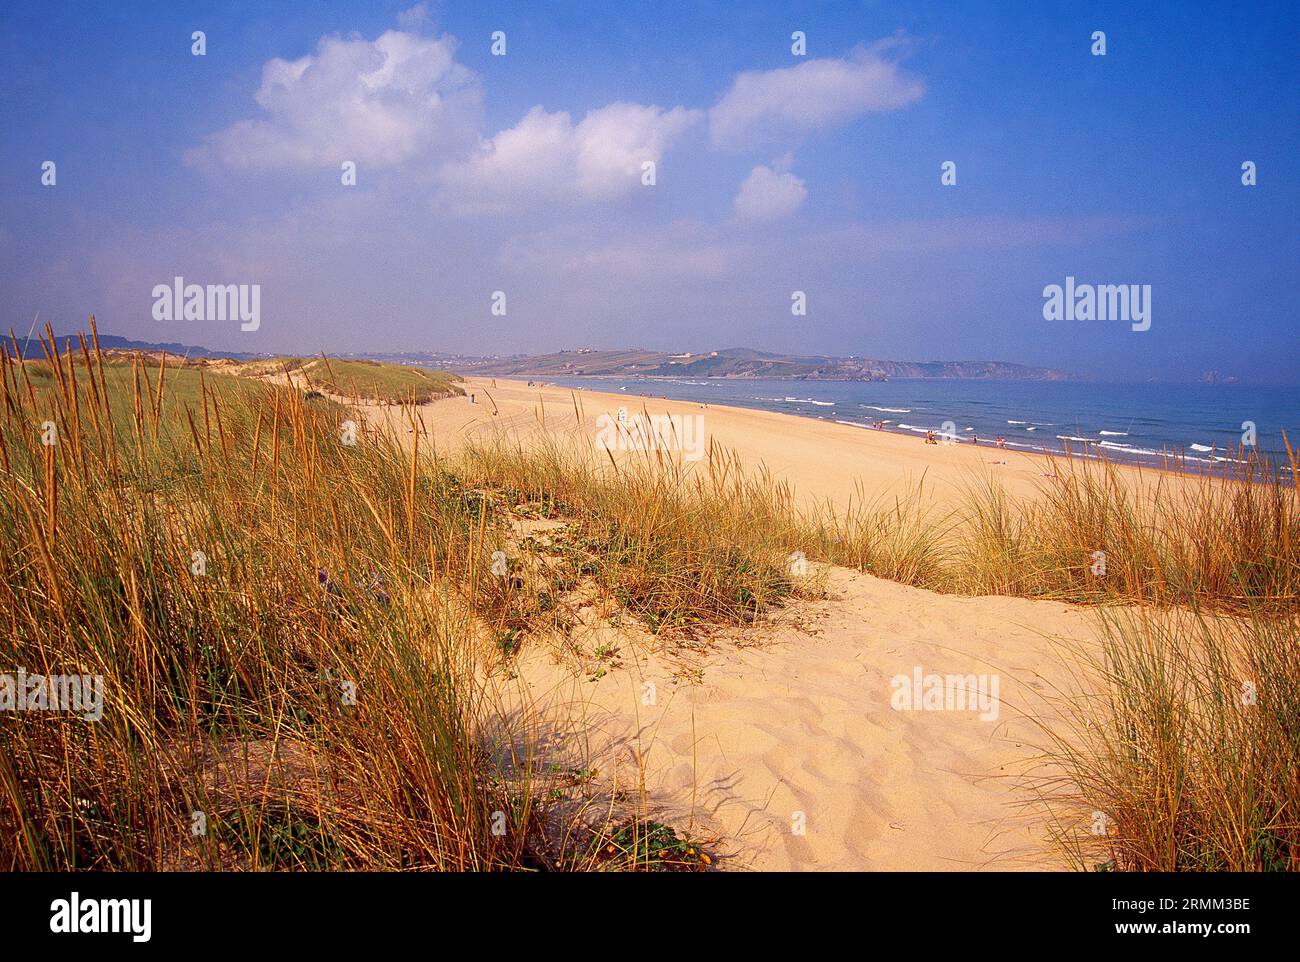 Dunes in Valdearenas beach. Dunas de Liencres Nature Reserve, Cantabria, Spain. Stock Photo